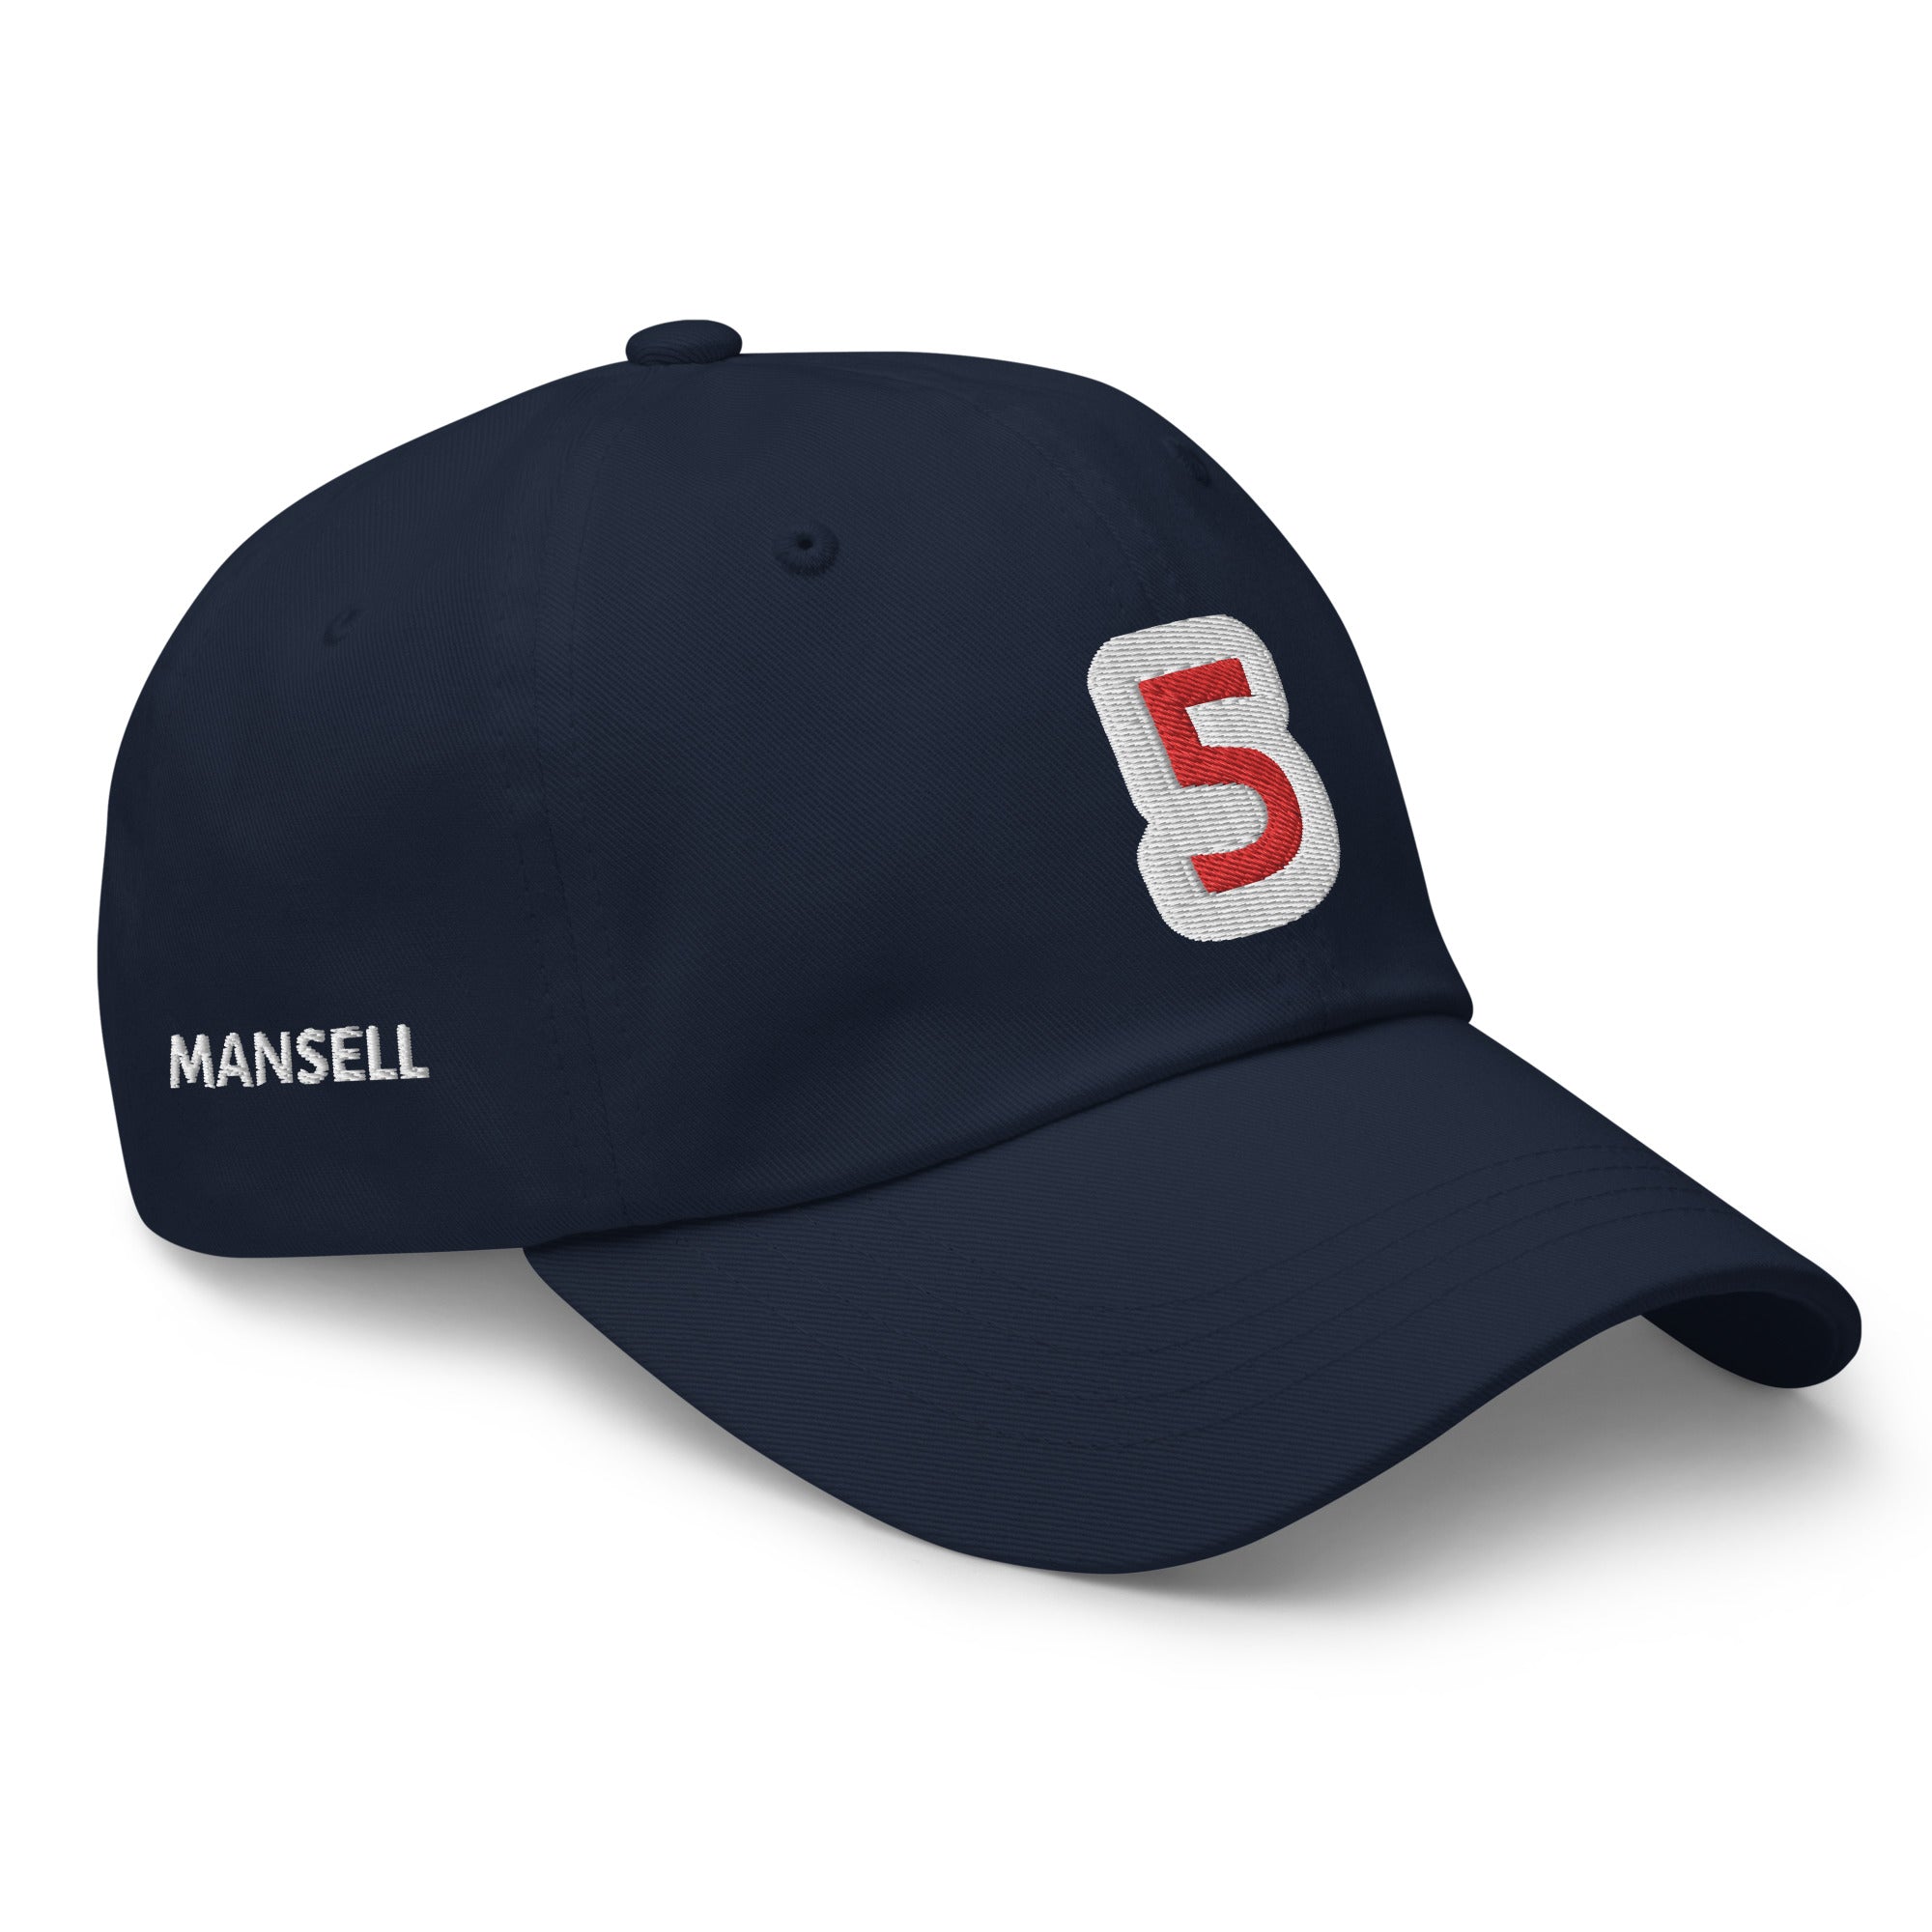 5: Nigel Mansell Williams FW 14B Navy Cap right front